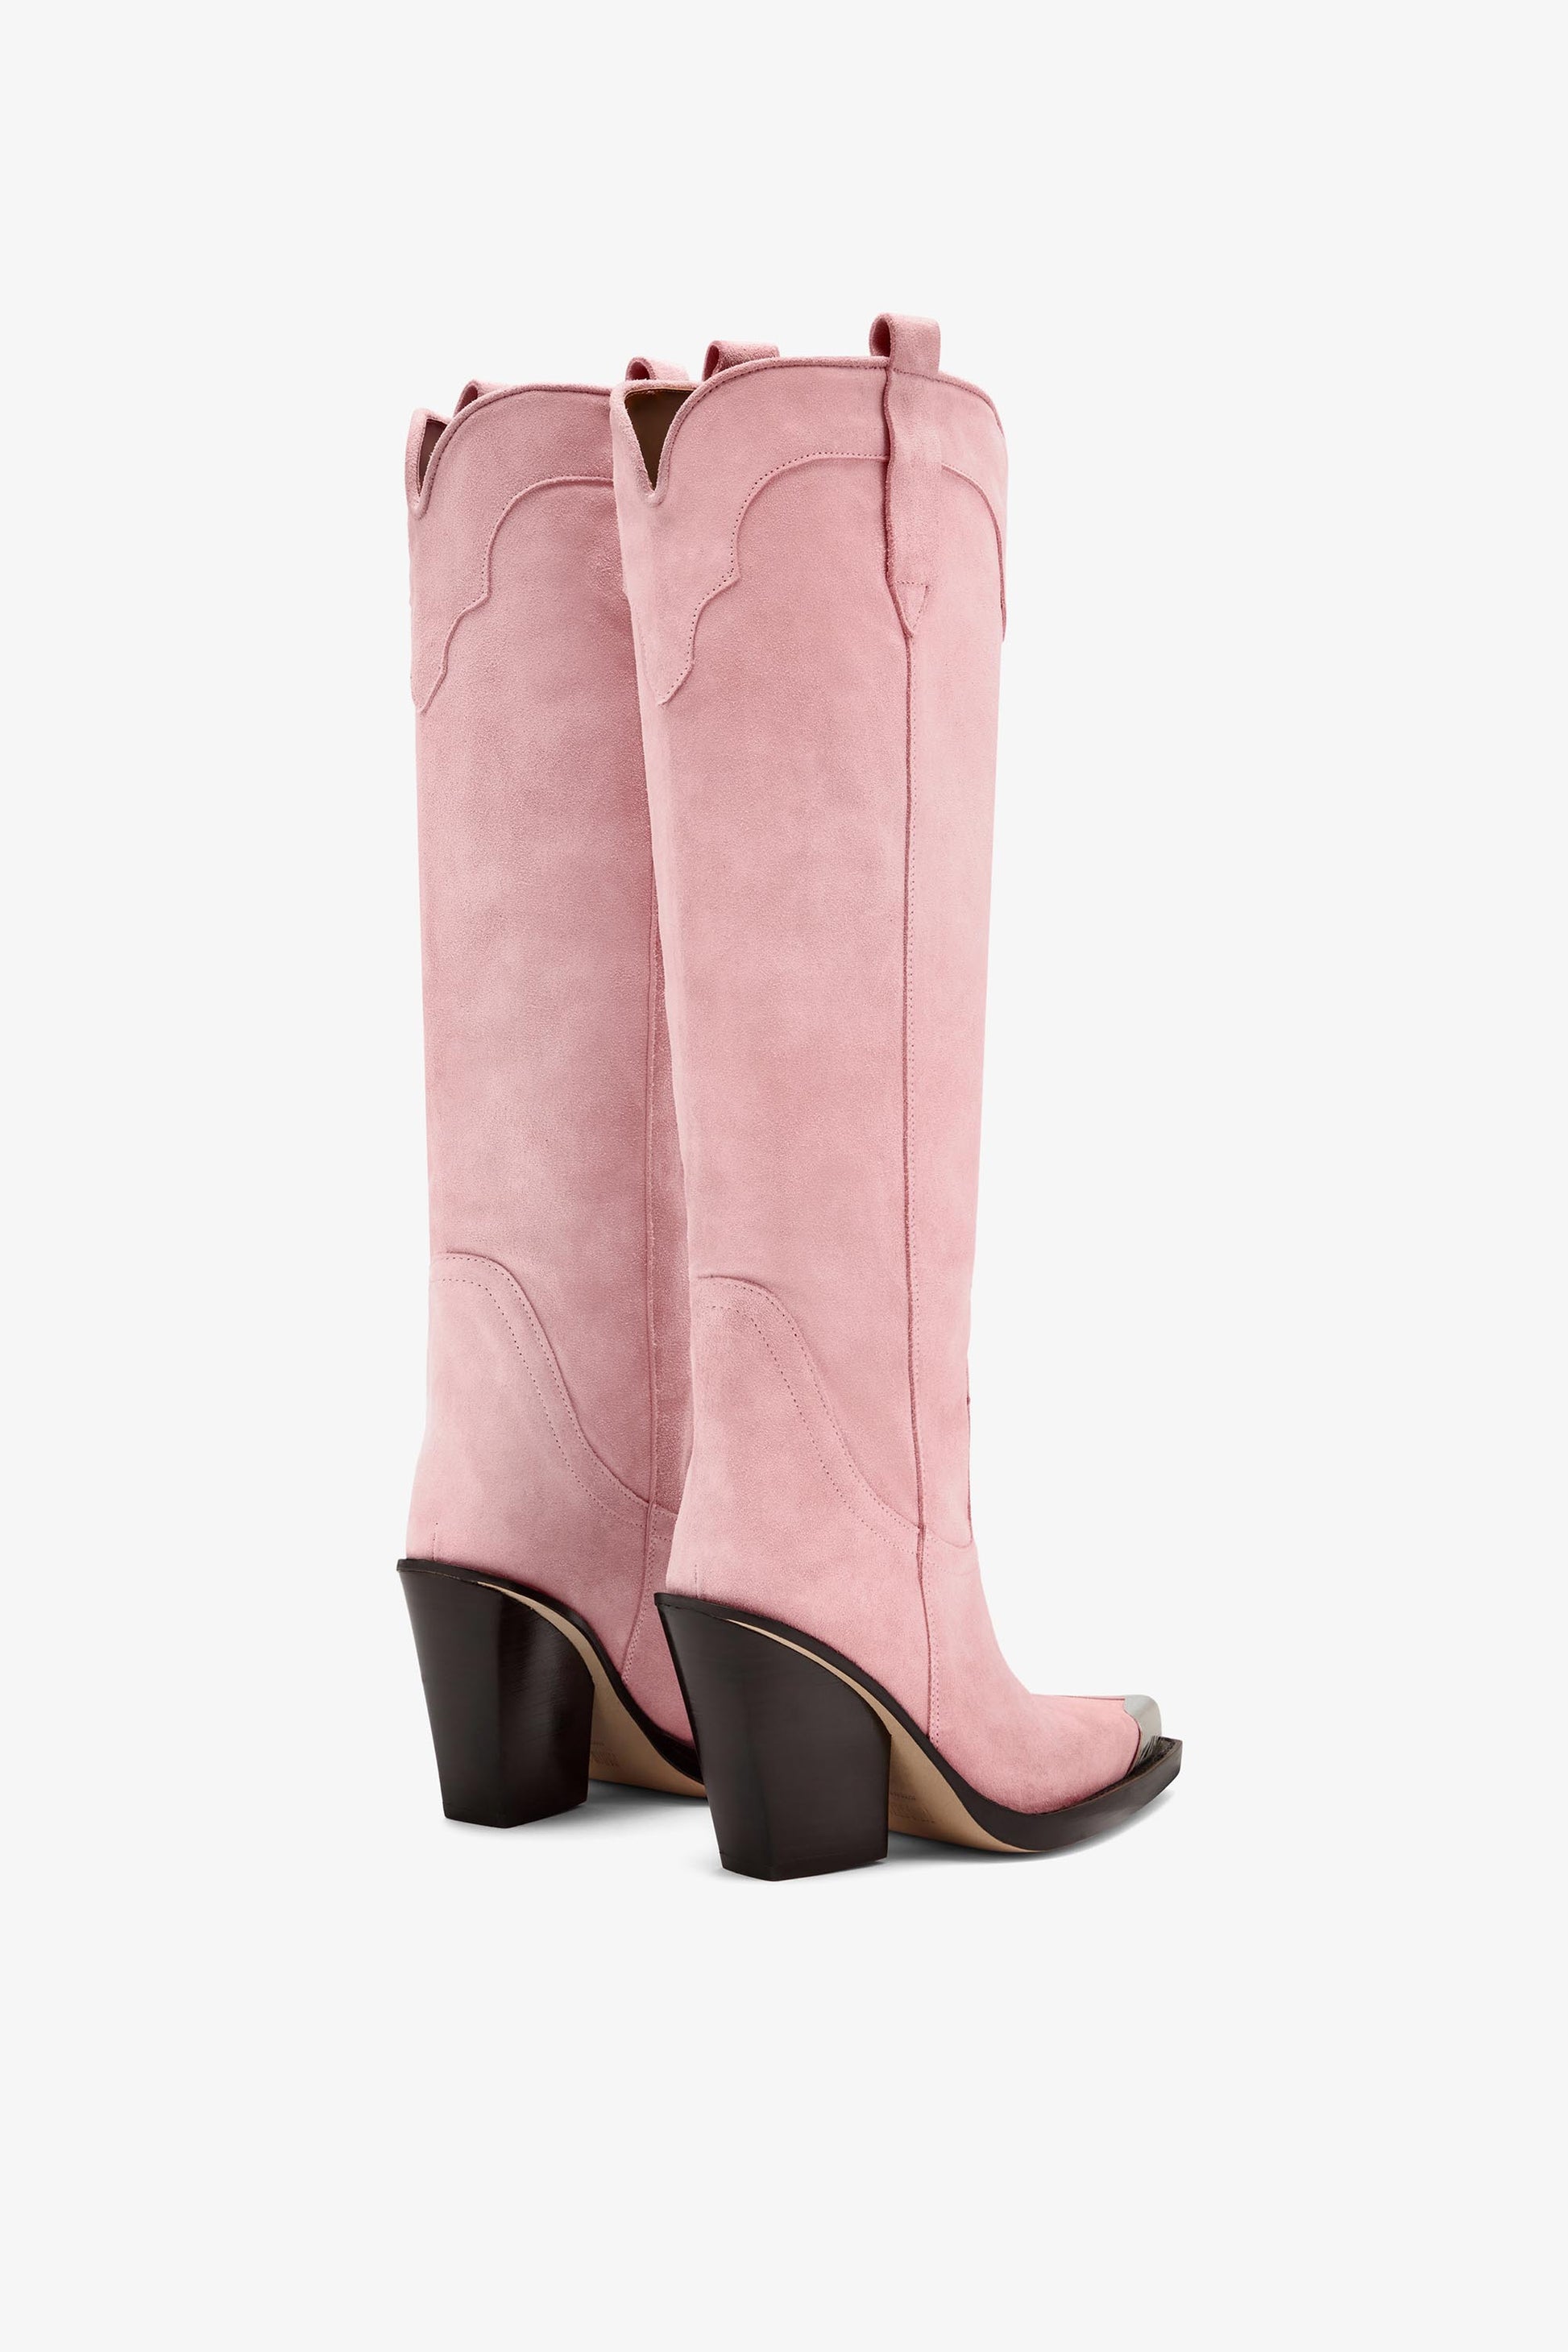 Pink suede embellished toe boot